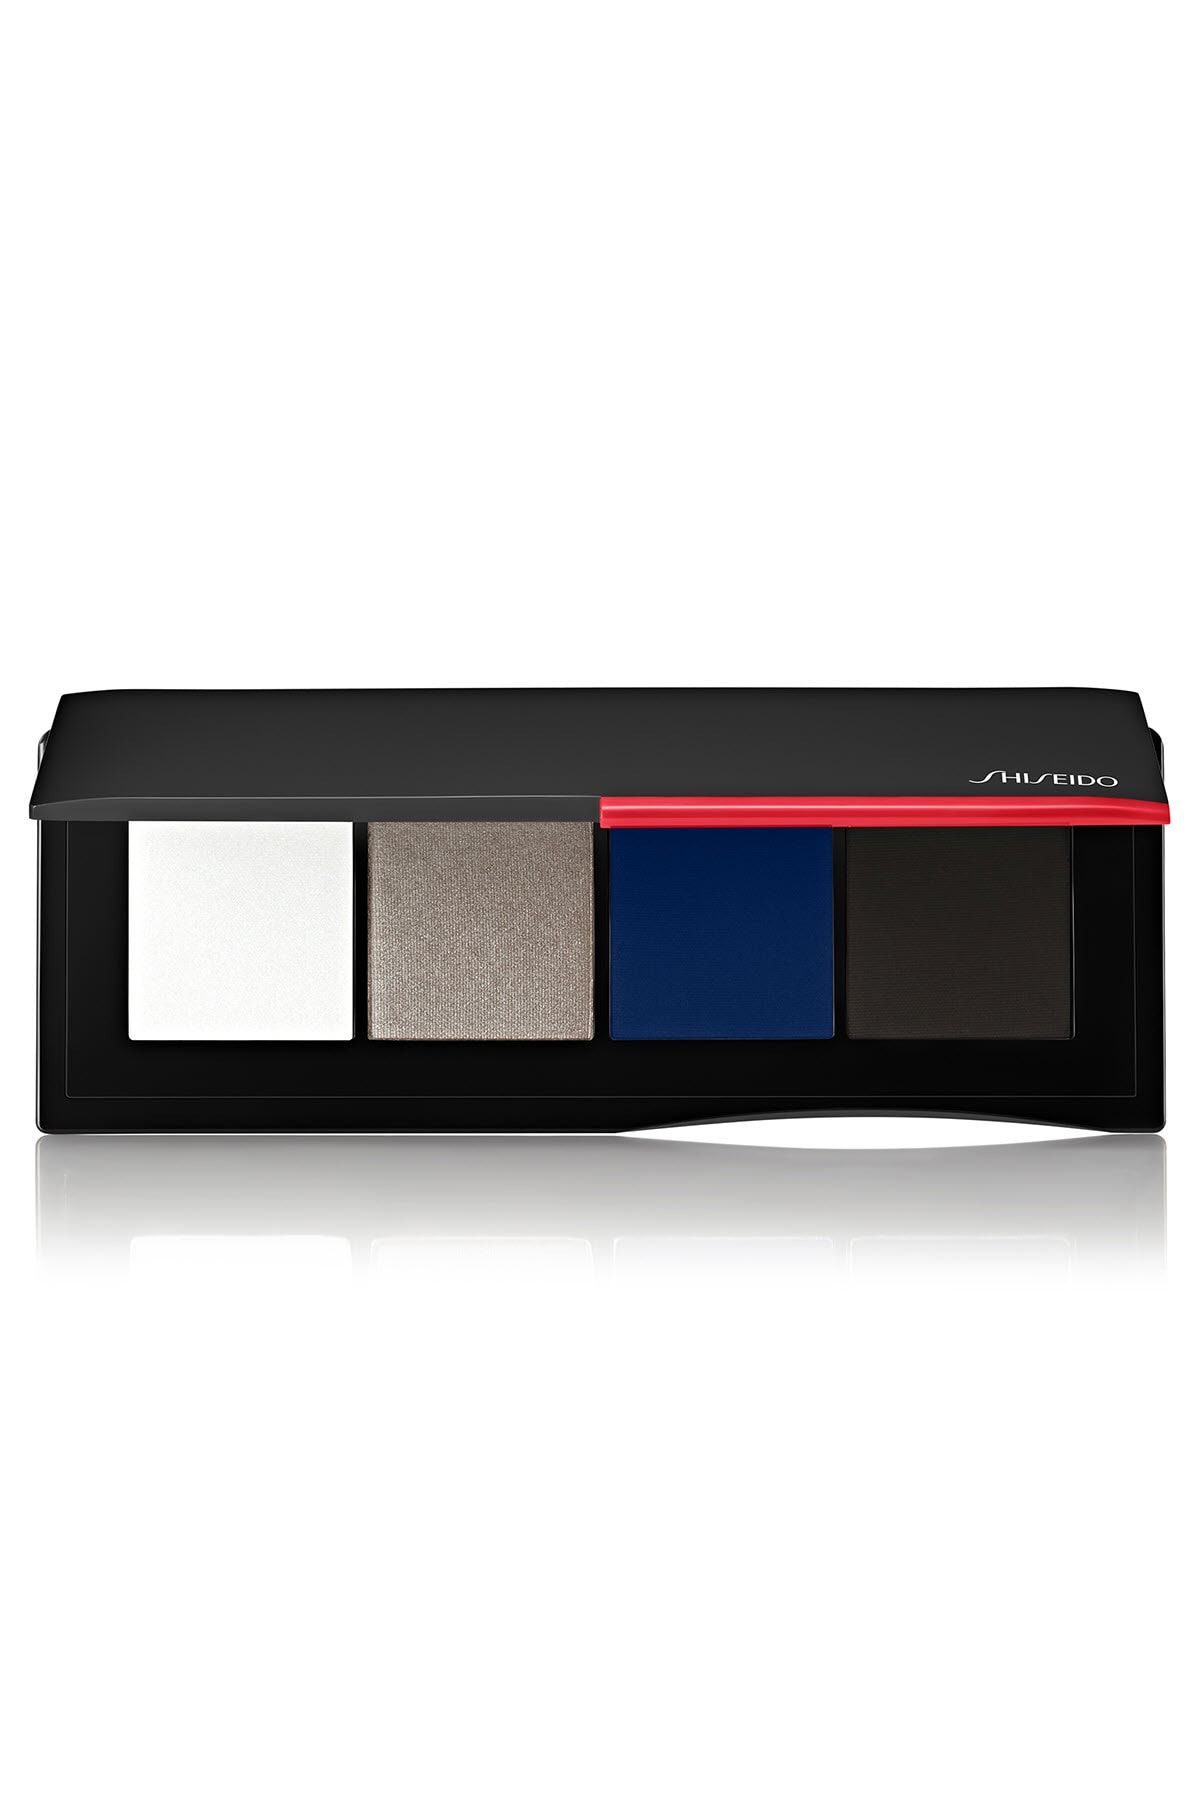 Shiseido Göz Farı Paleti - Essentialist Eye Palette 04 730852147416